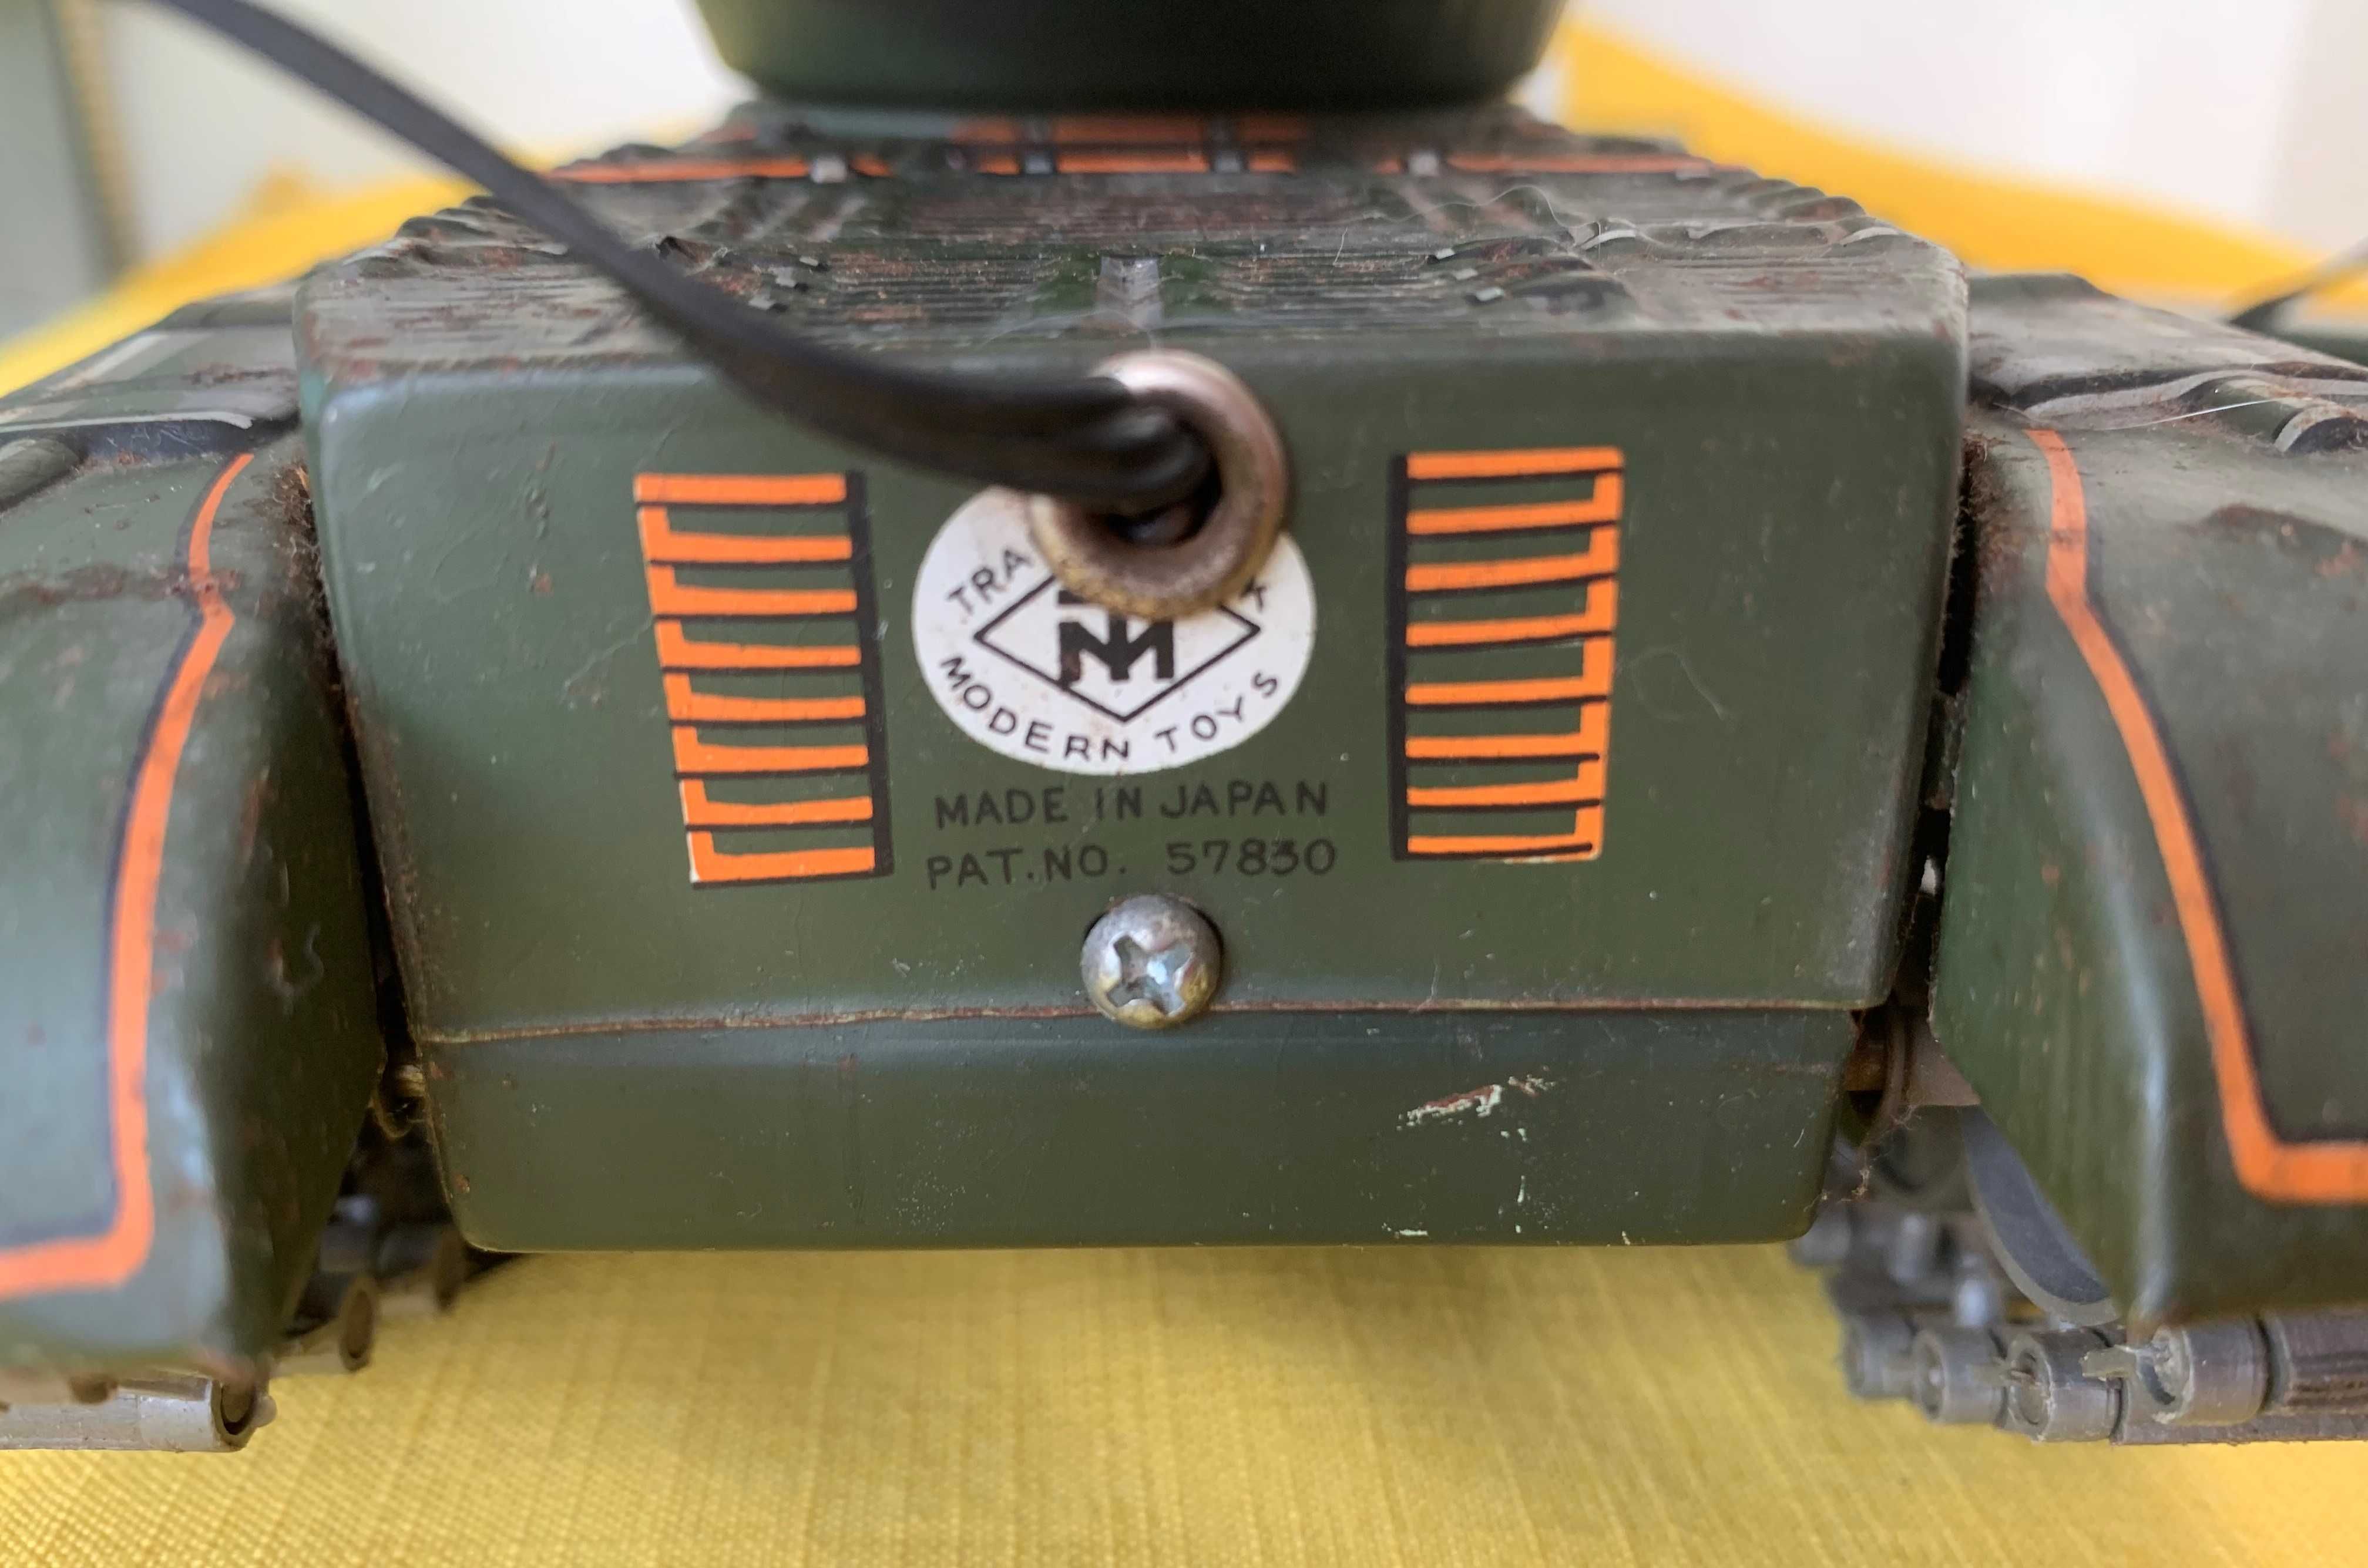 Brinquedo - Tanque de guerra M-40, de lata (vintage)